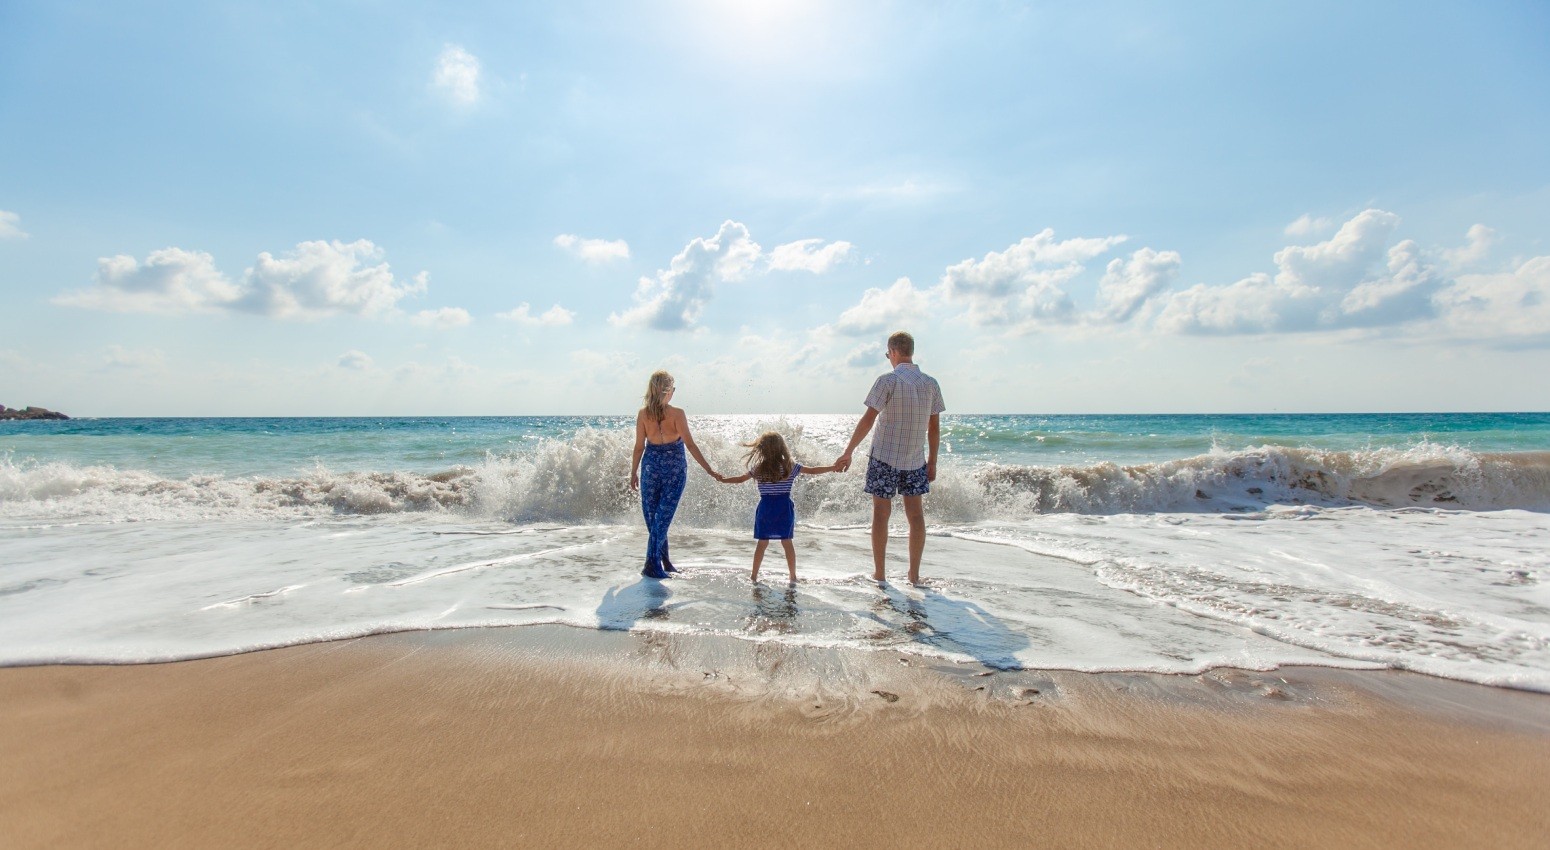 Family enjoying a walk on a sandy beach.